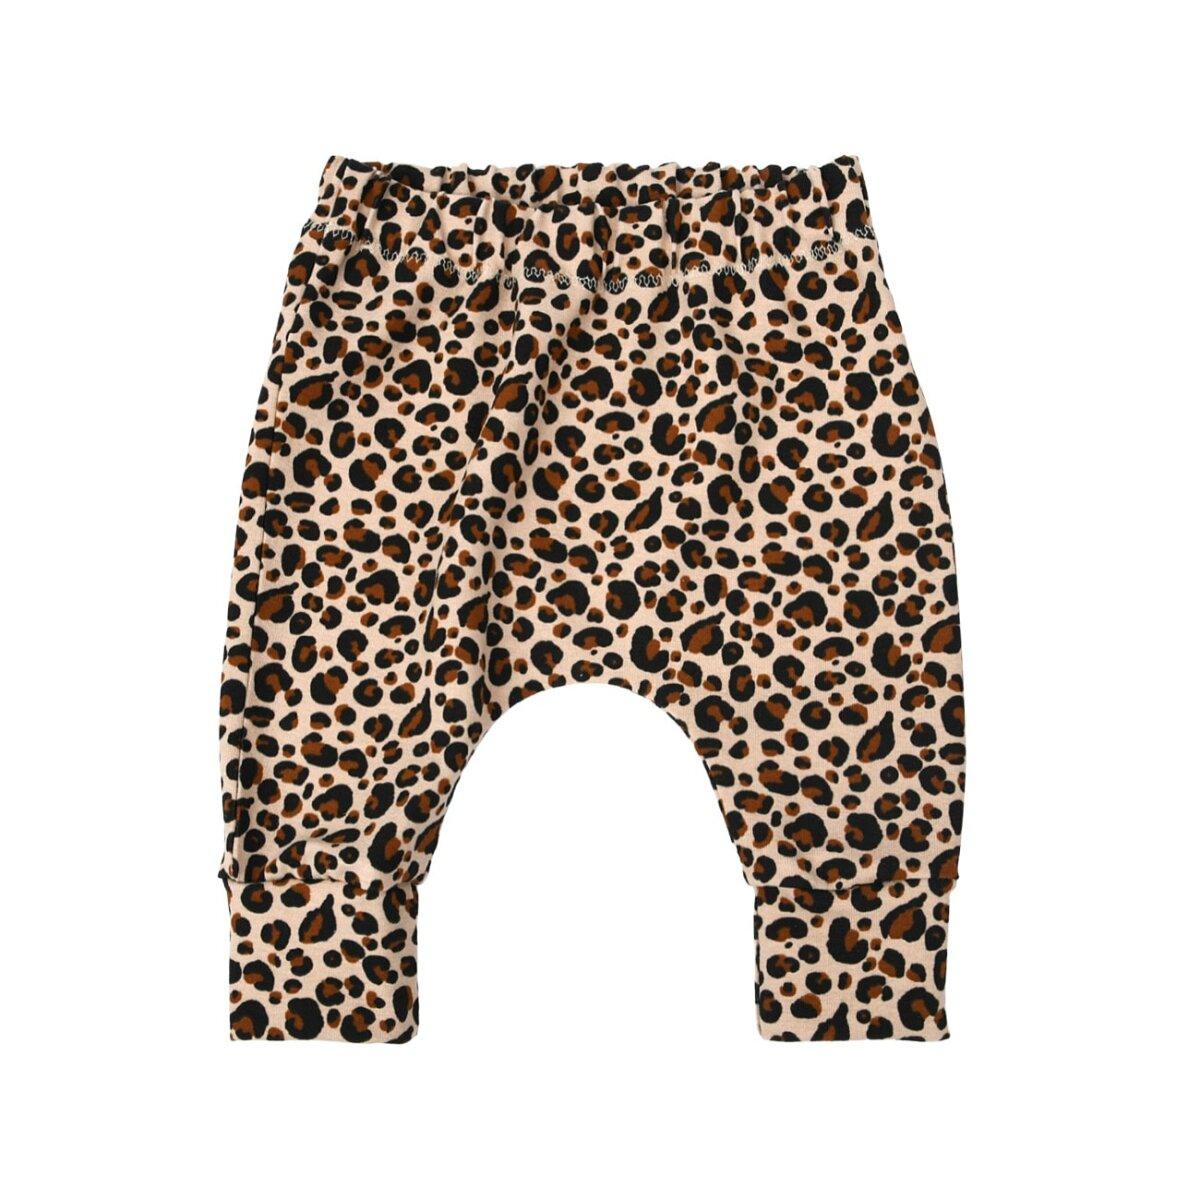 https://www.suessezwerge.de/media/image/product/17496/lg/babyhose-slim-pants-leopardenmuster-animalprint-beige-schwarz.jpg